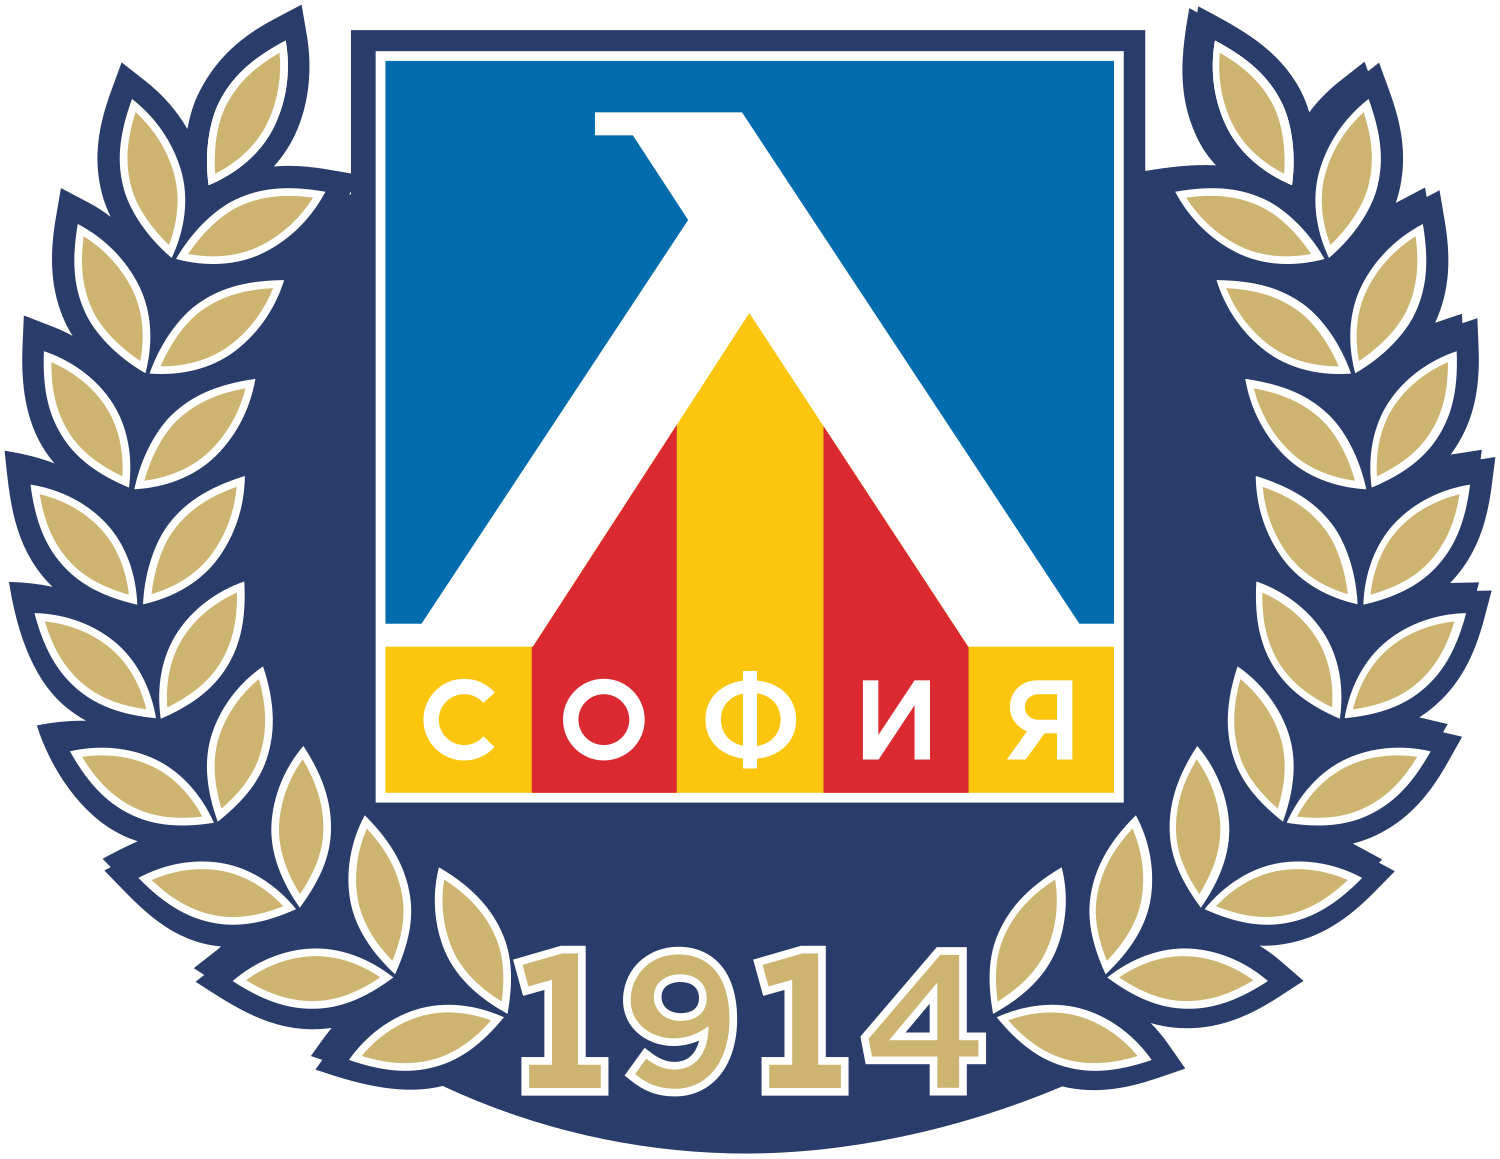 PFC CSKA Moscow - Wikipedia